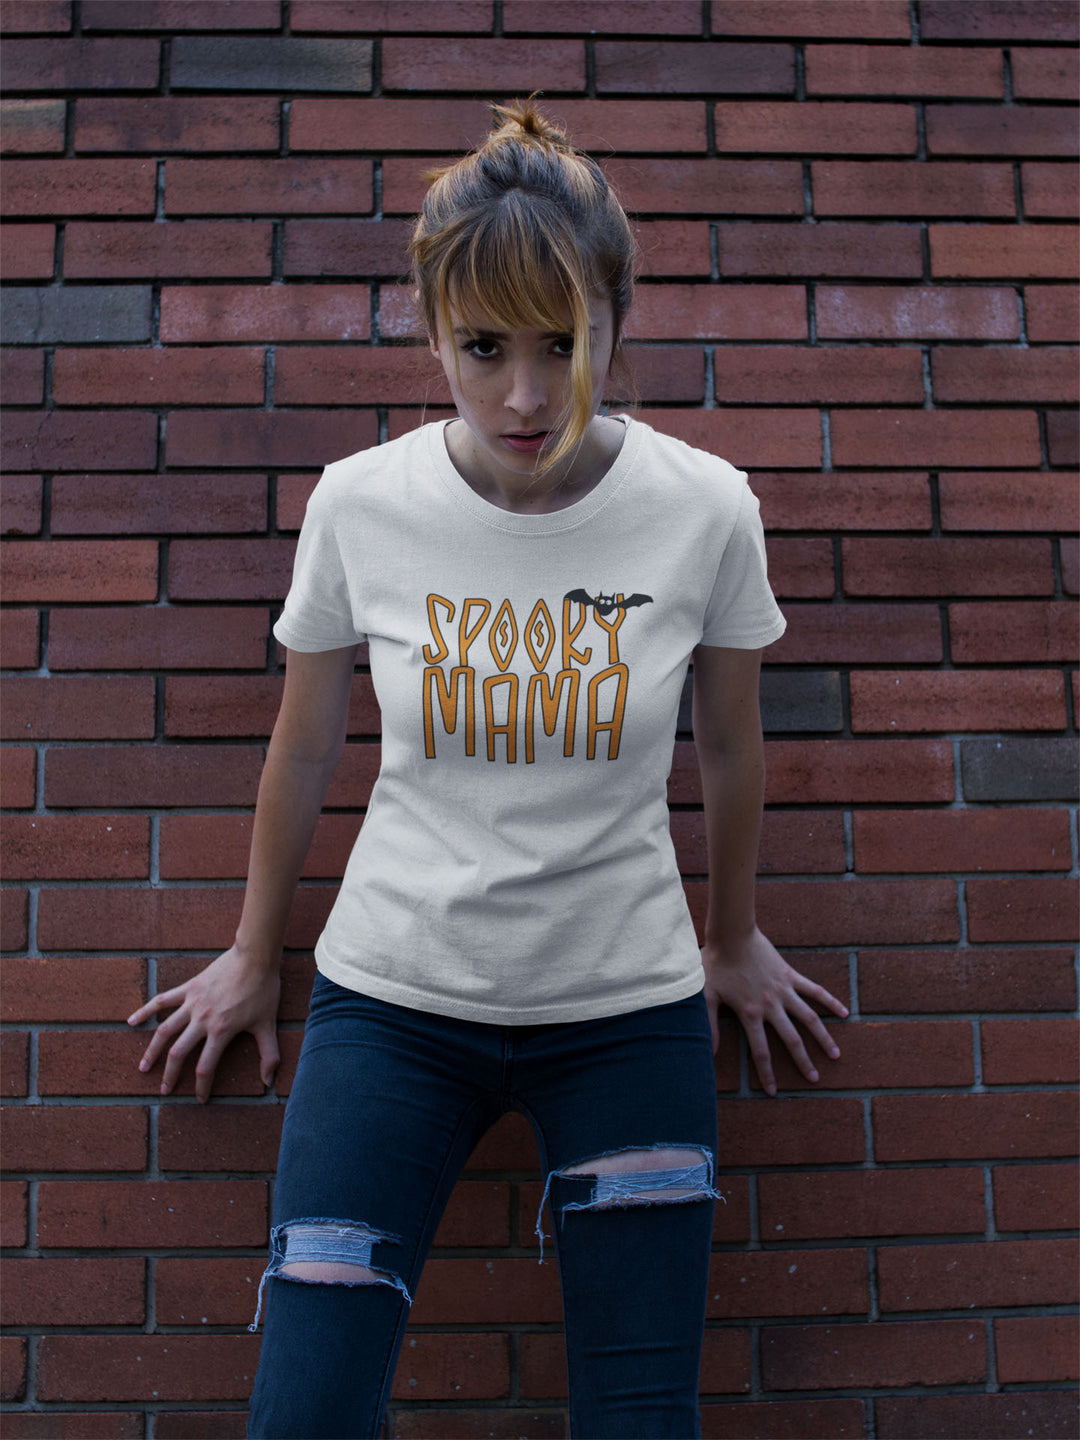 Spooky Mama. Short Sleeve T Shirt for Women.